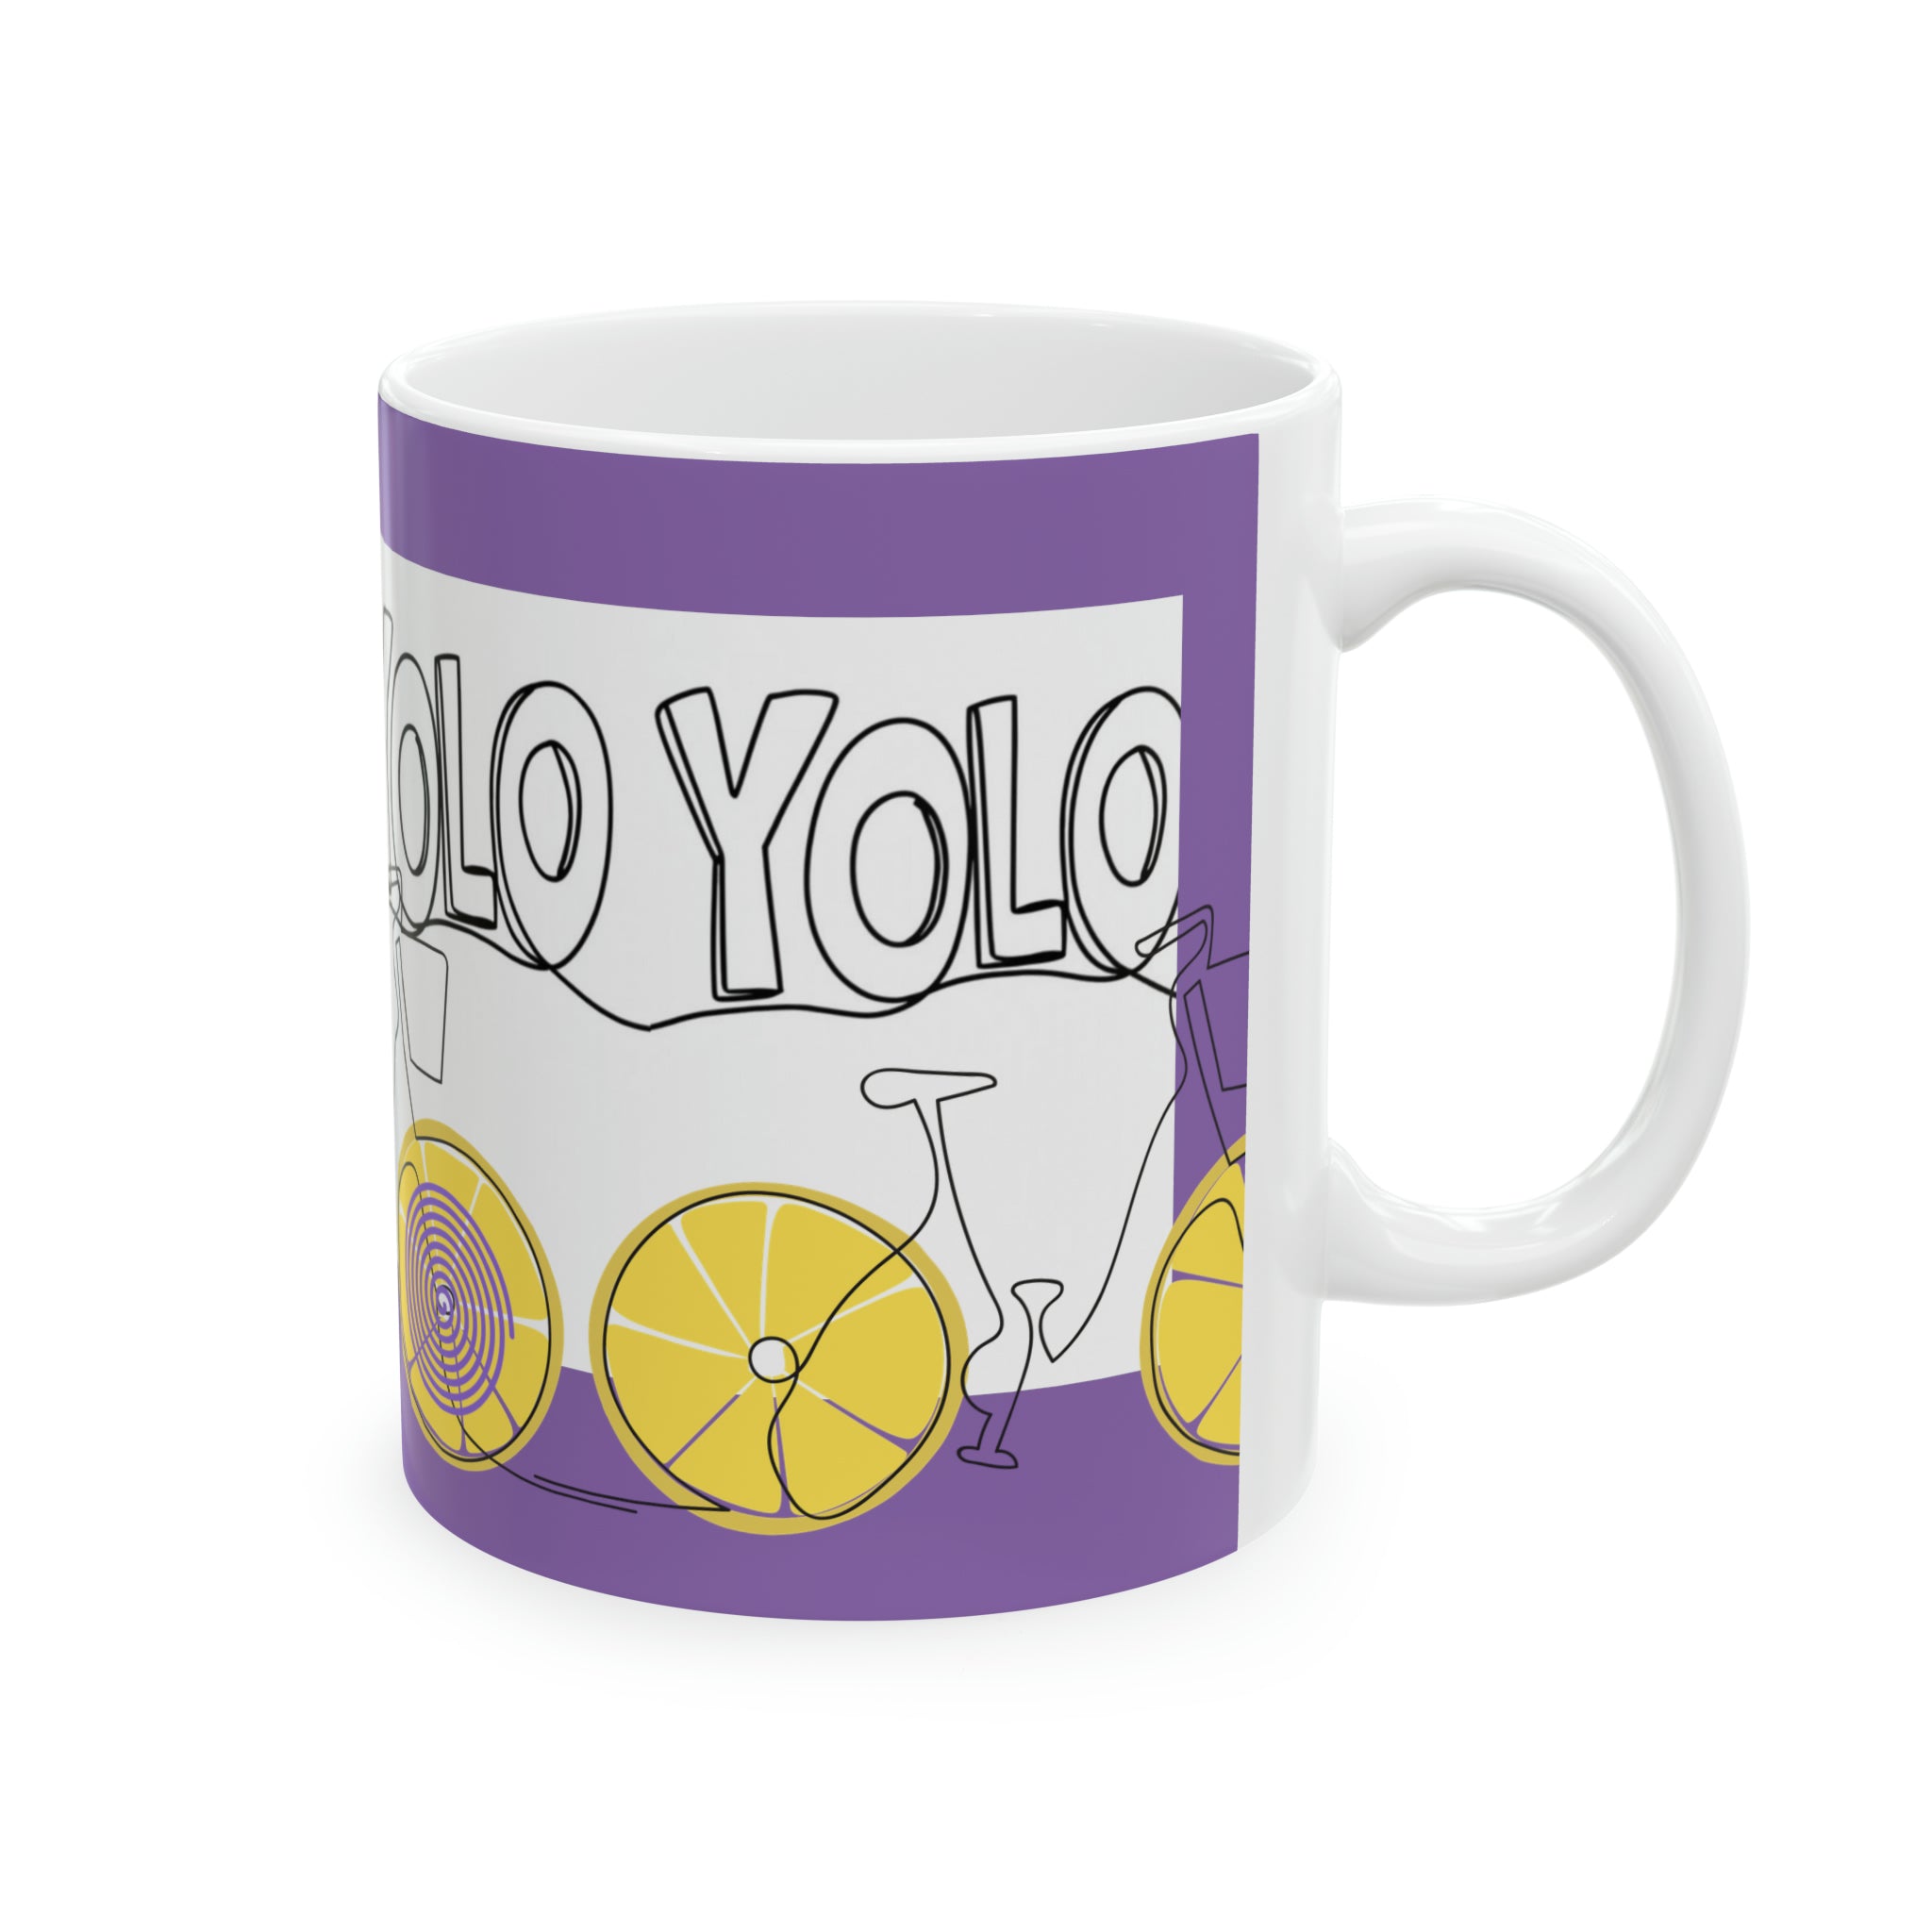 YOLO - You only live Once Ceramic Mug, 11oz